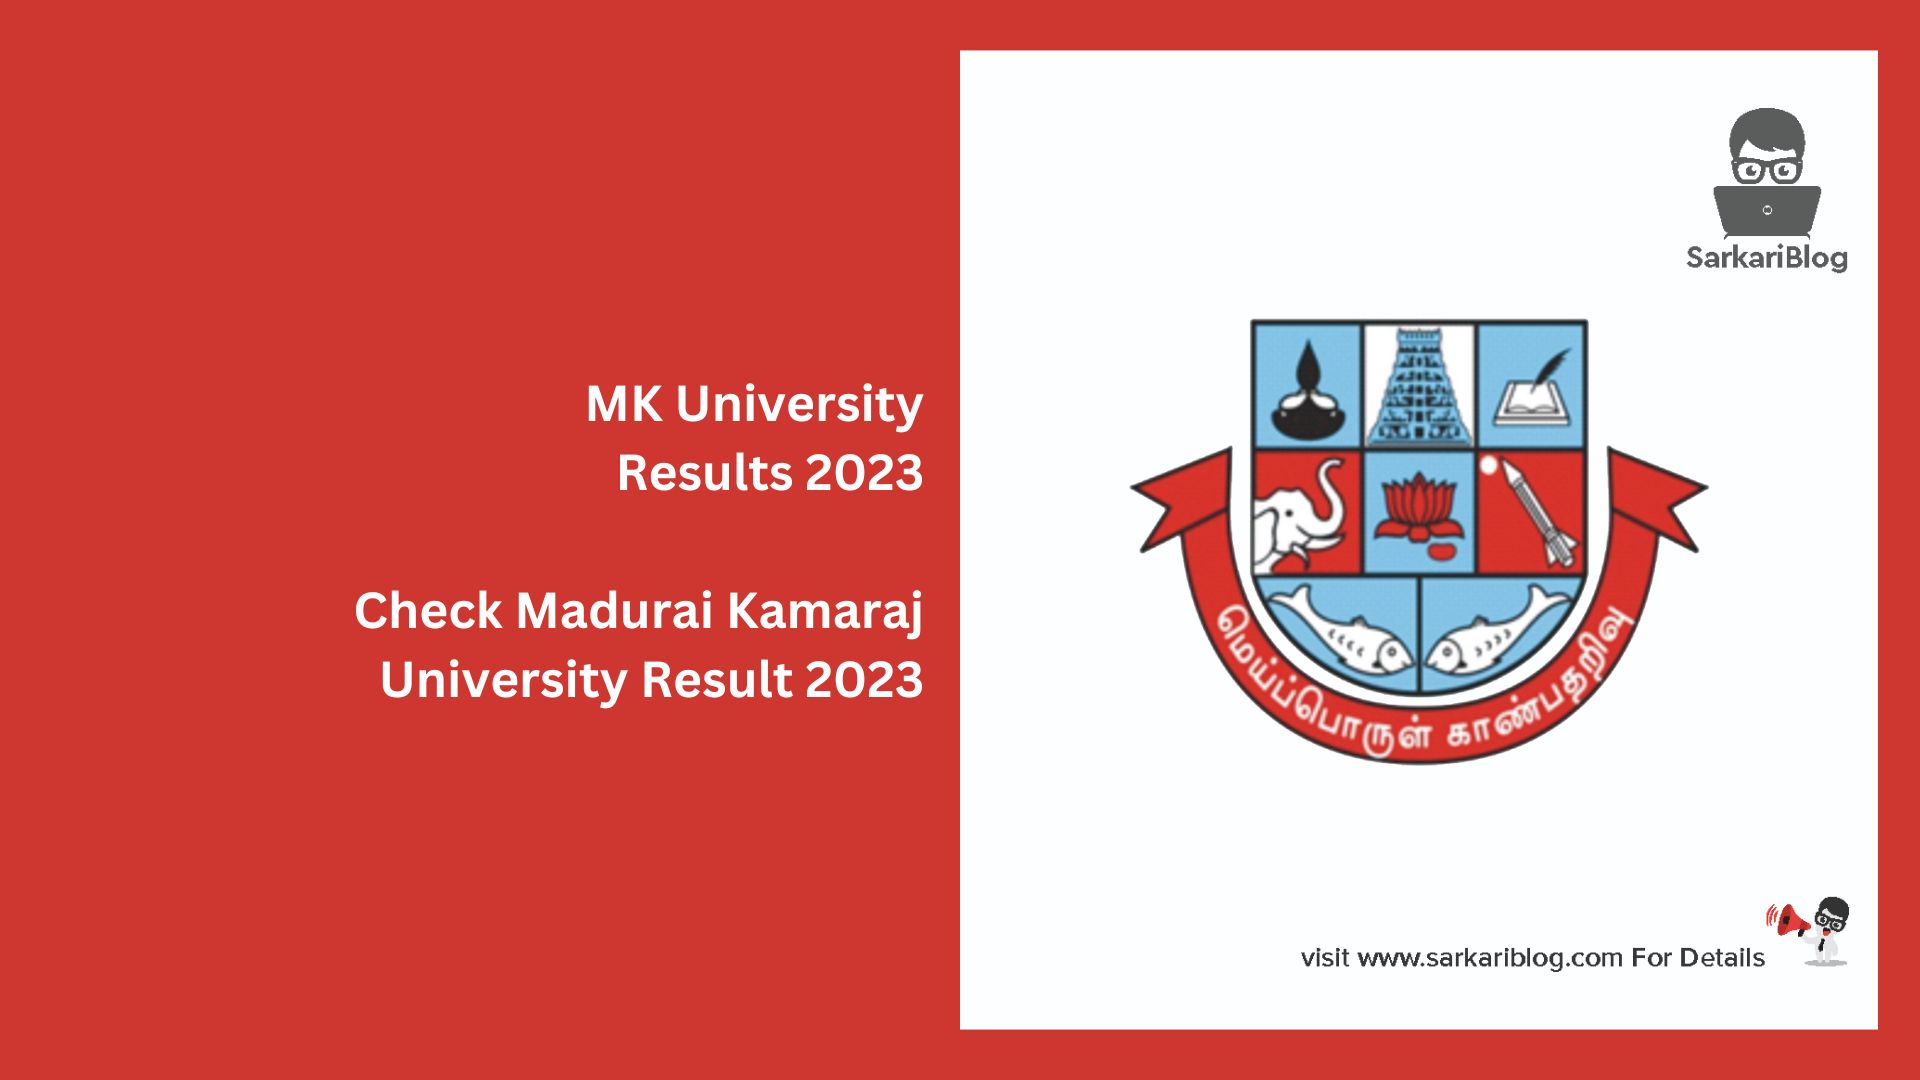 MK University Results 2023